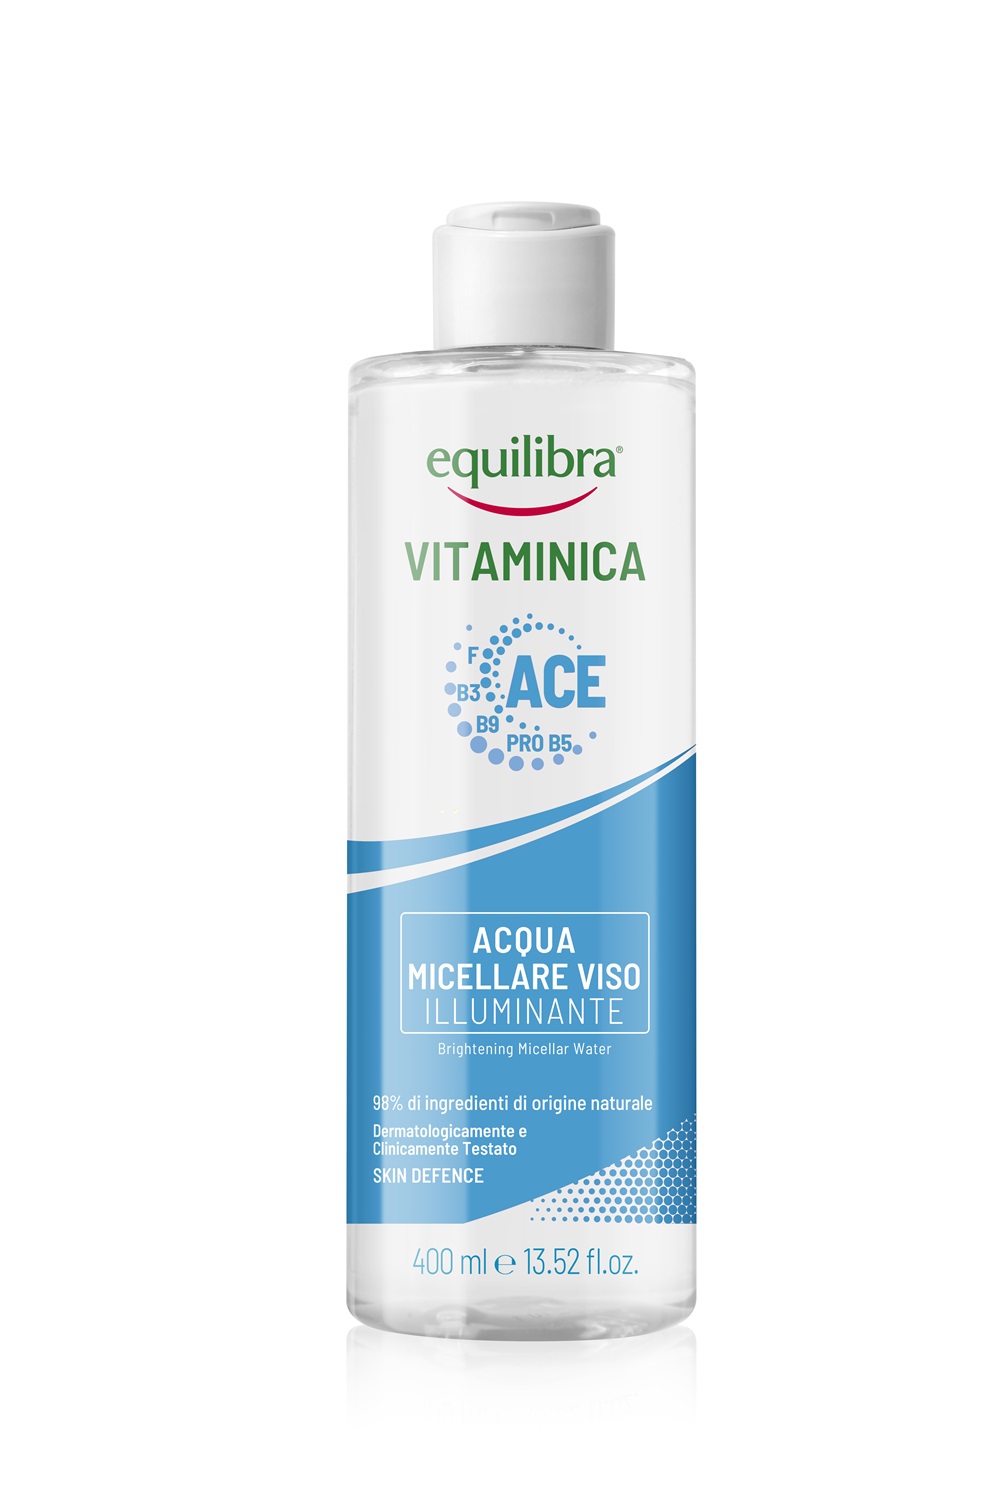 Image of Acqua Micellare Illuminante Vitaminica Equilibra 400ml